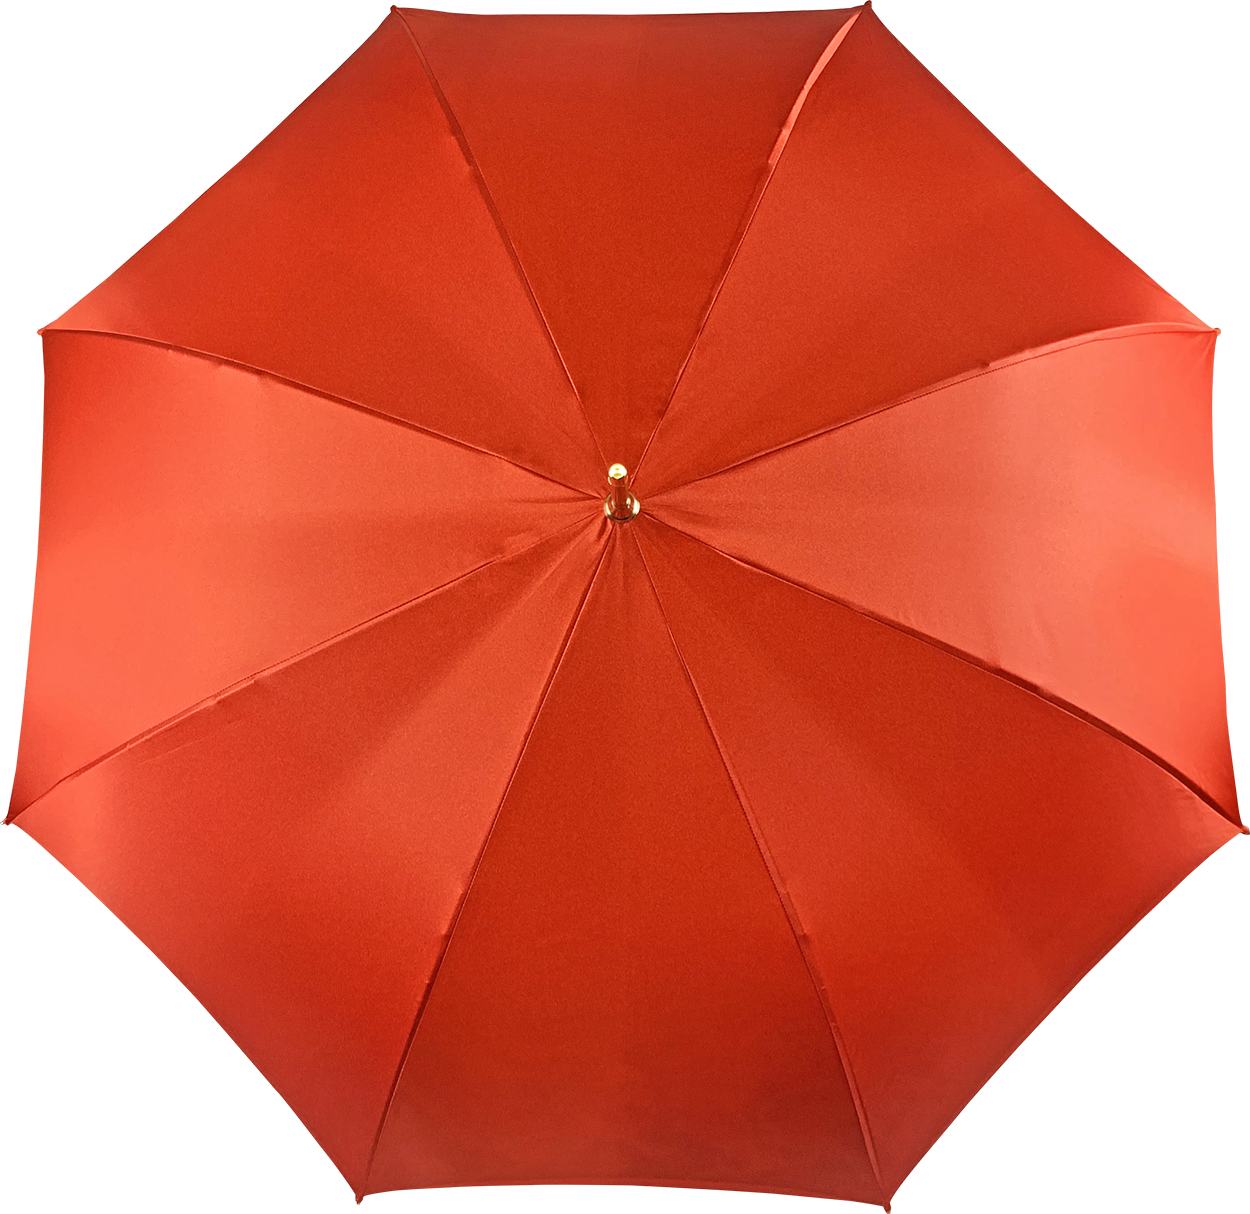 Marvellous Red umbrella with jewel handle